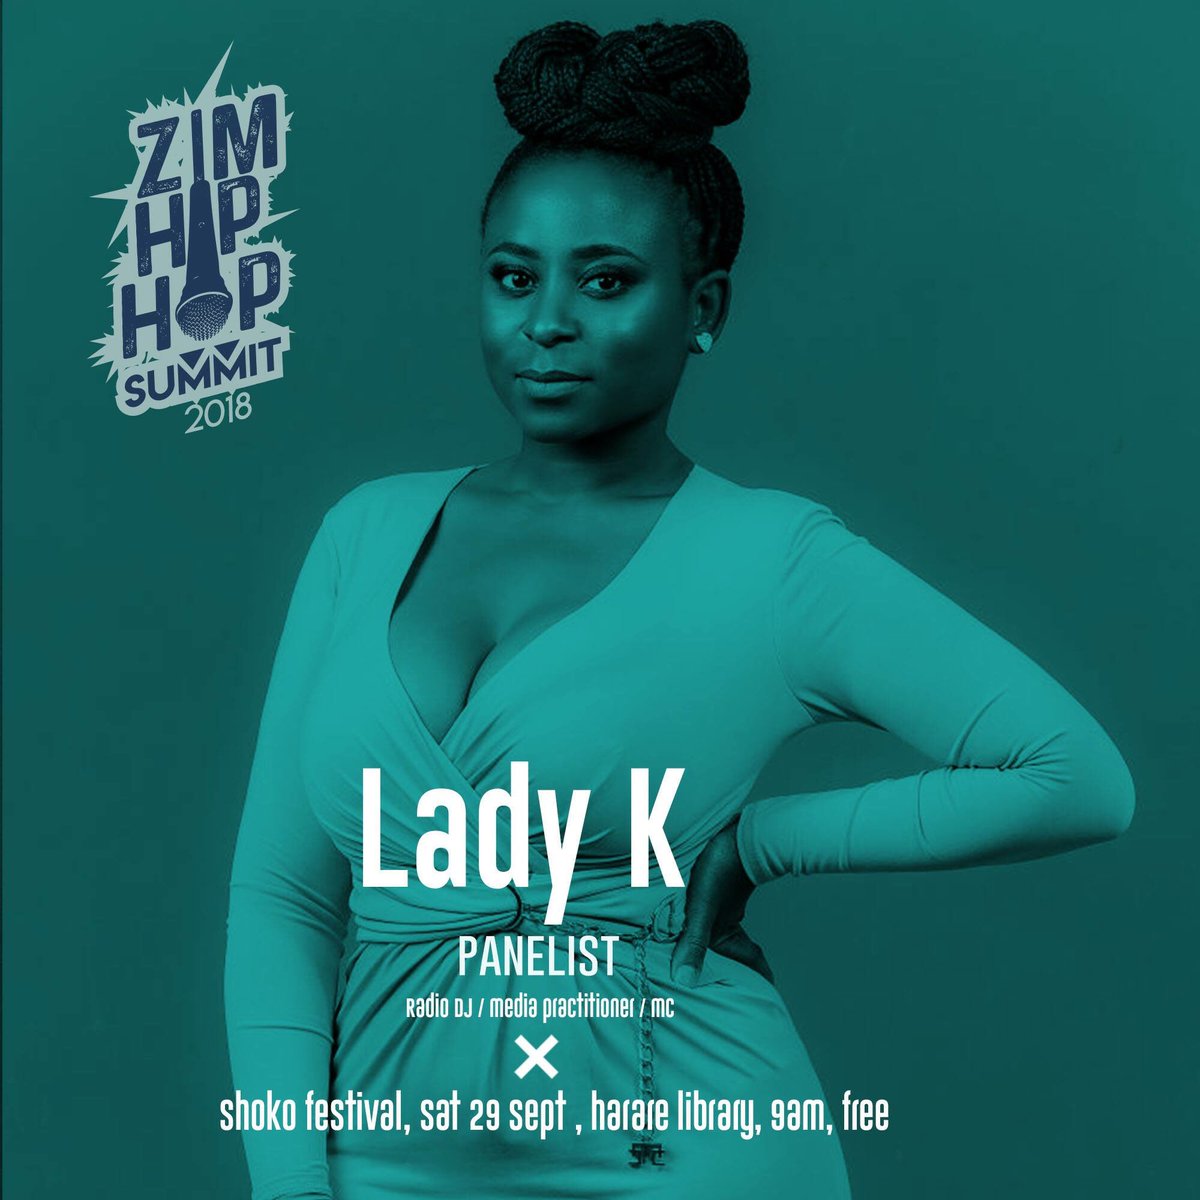 Zim Hip Hop Summit Panelist - Lady K.jpg